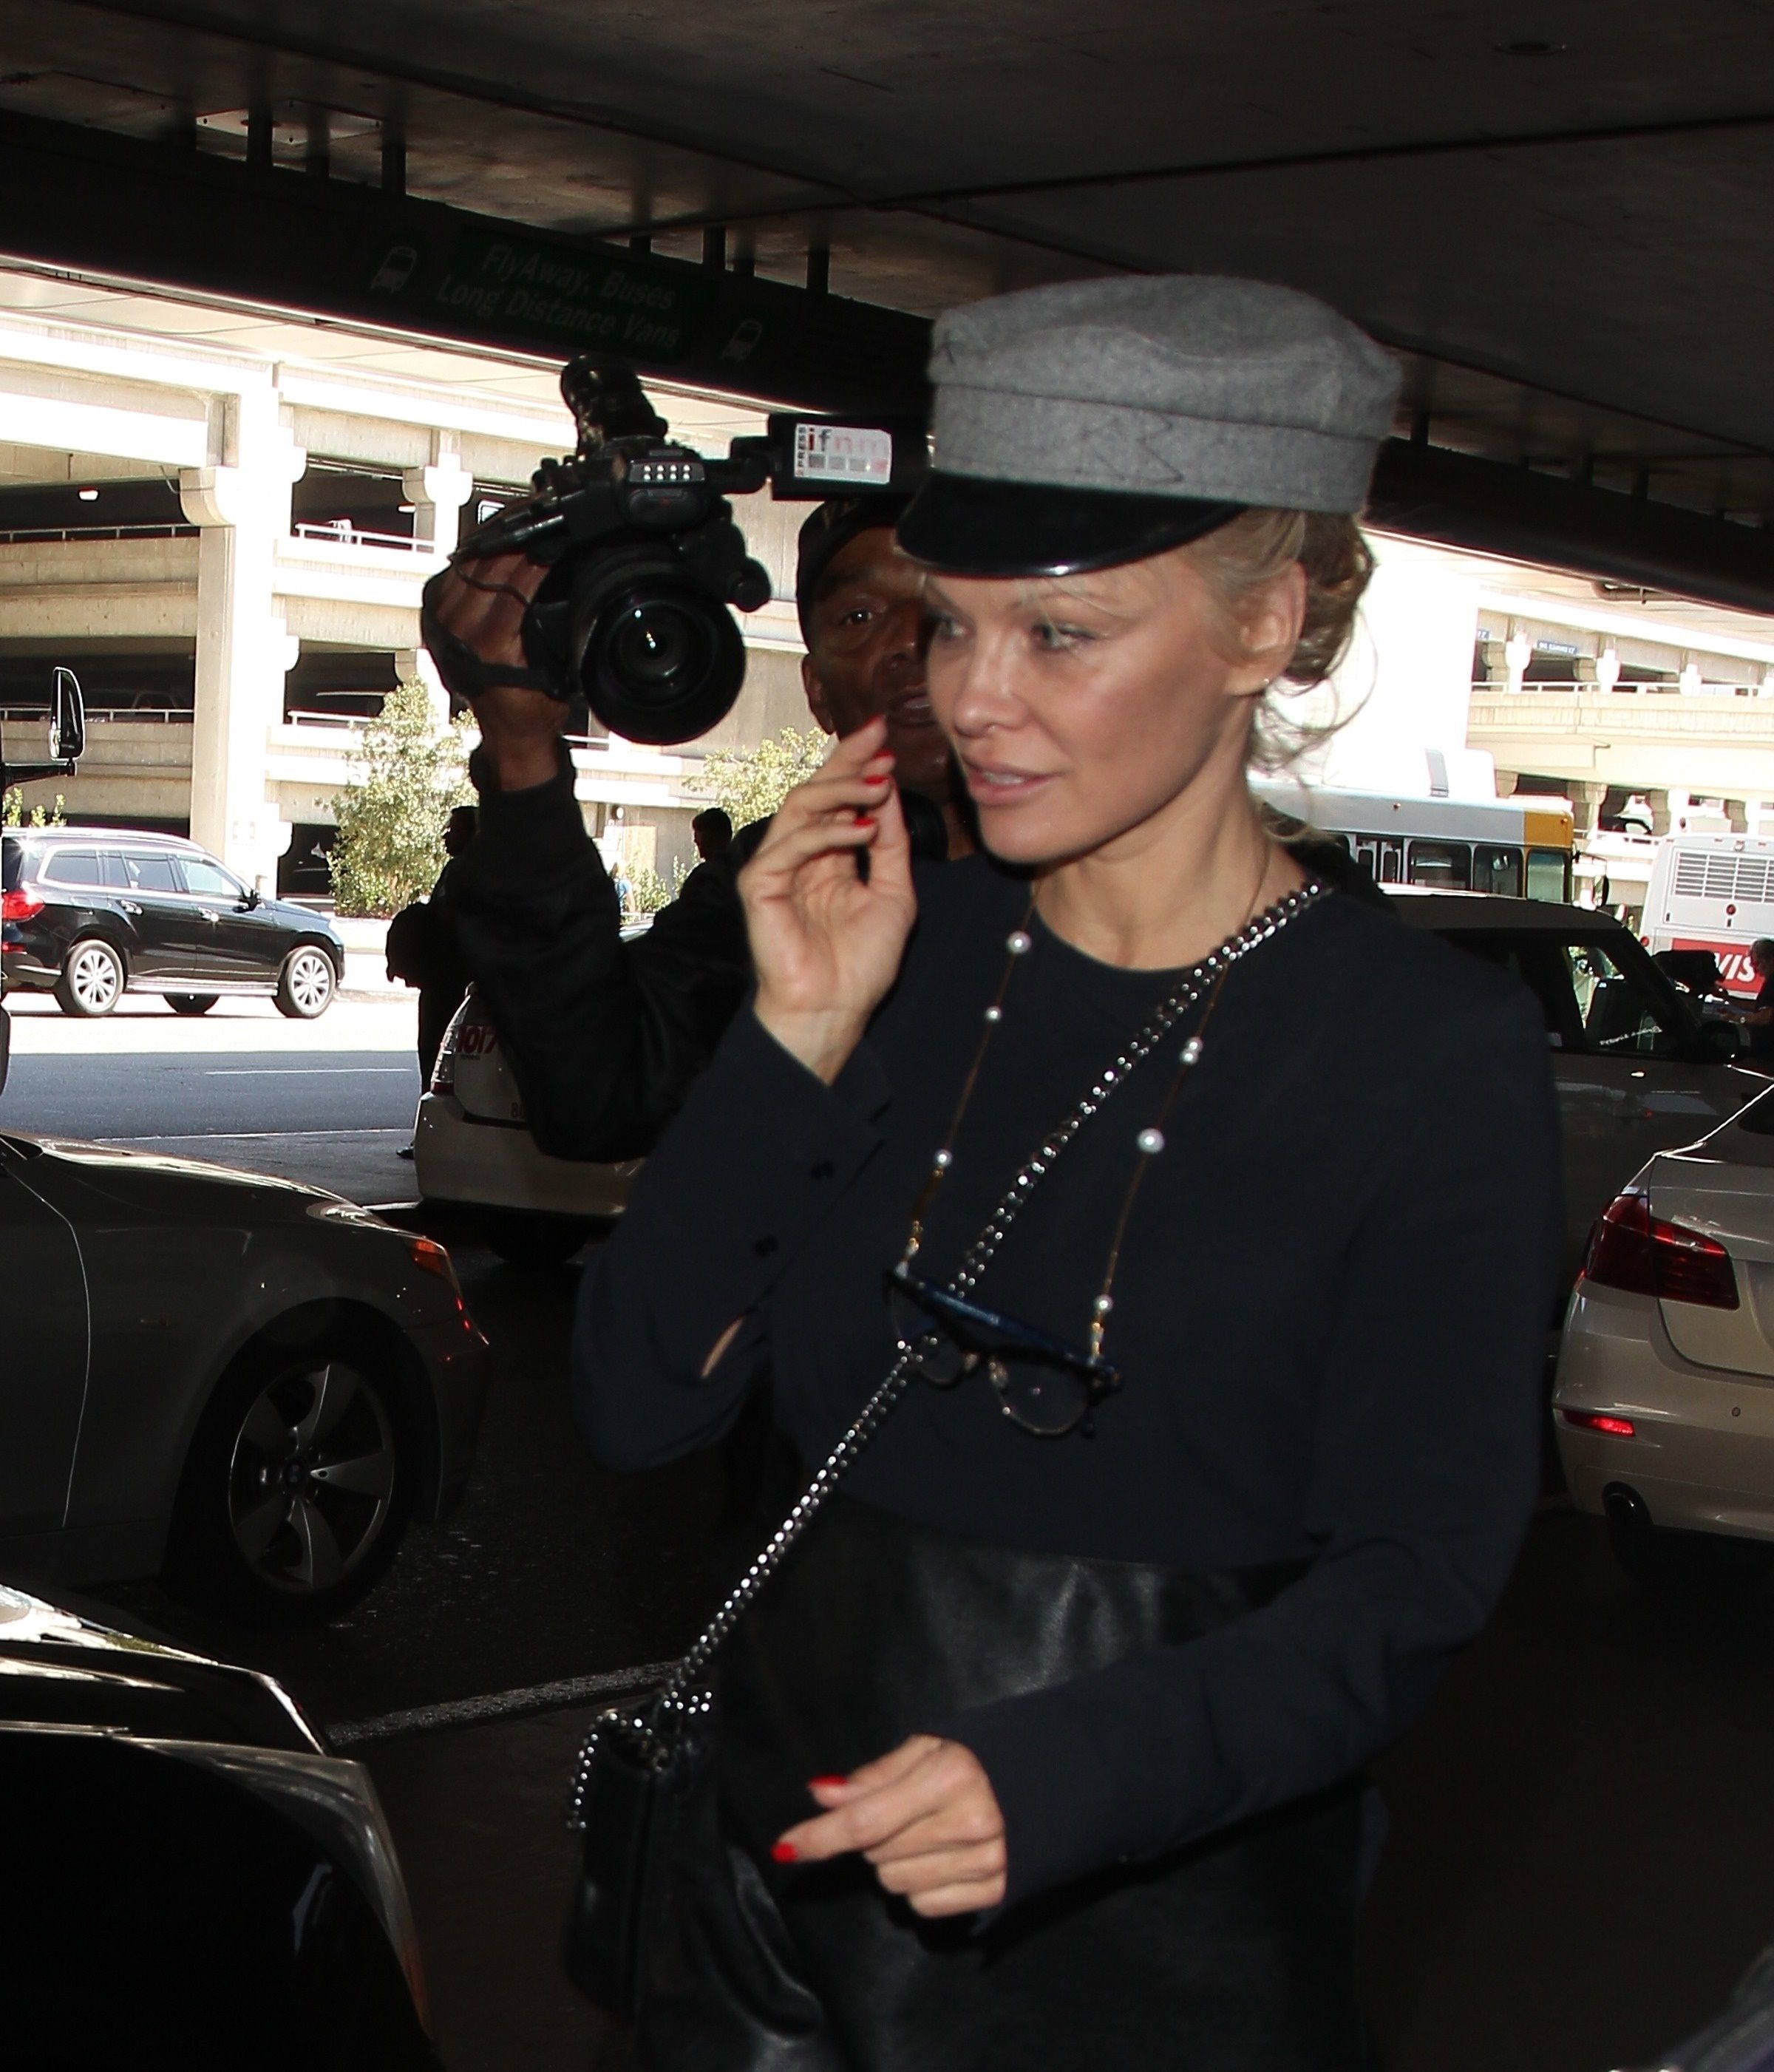 Pamela Anderson arrives at LAX